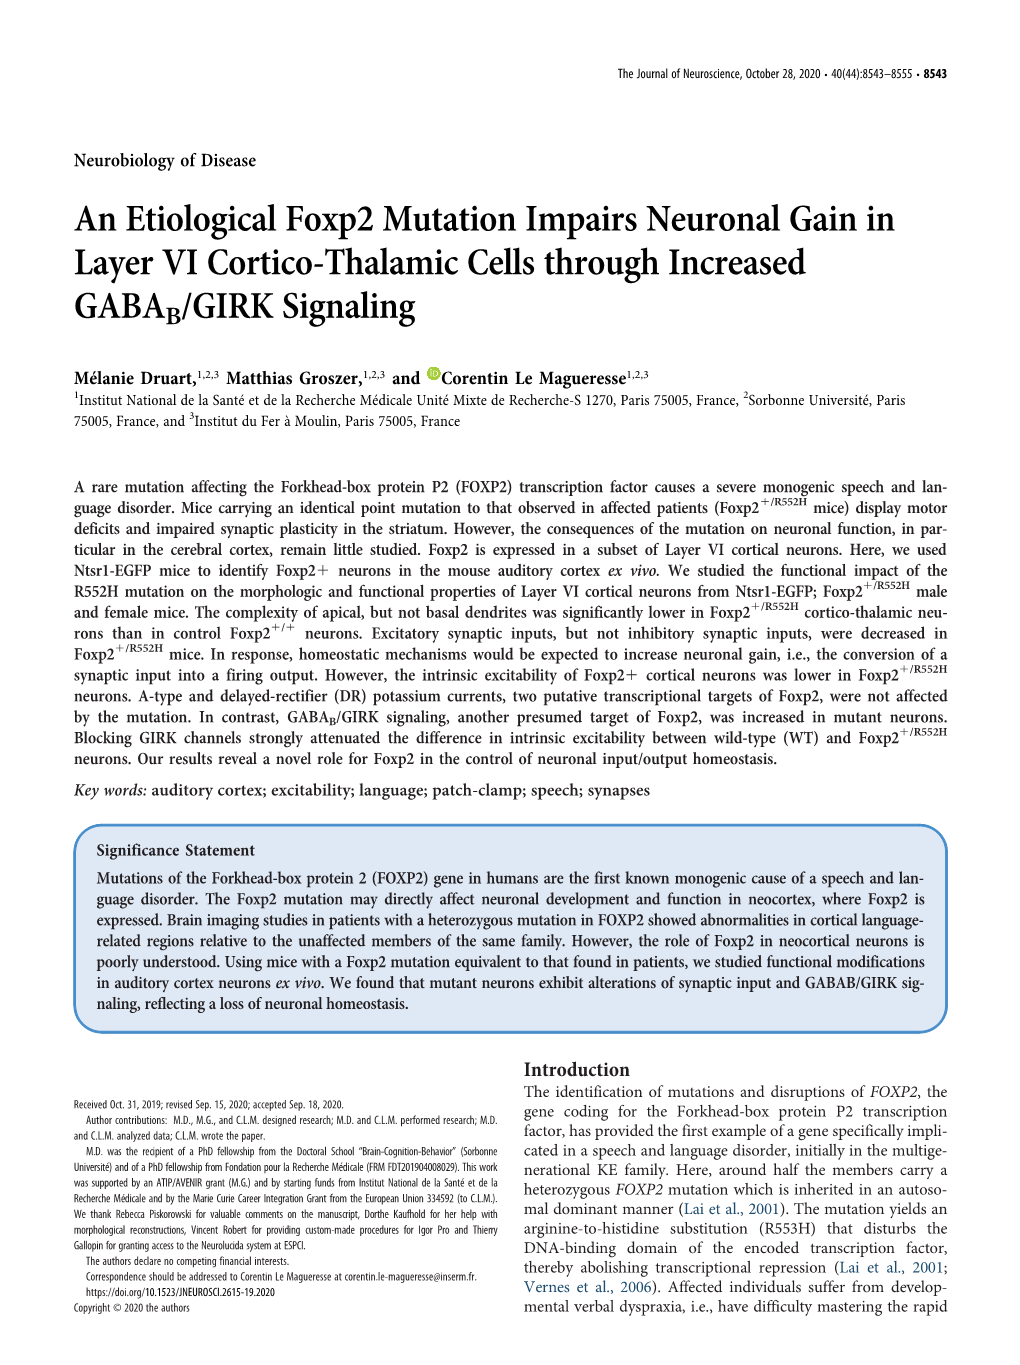 An Etiological Foxp2 Mutation Impairs Neuronal Gain in Layer VI Cortico-Thalamic Cells Through Increased GABAB/GIRK Signaling